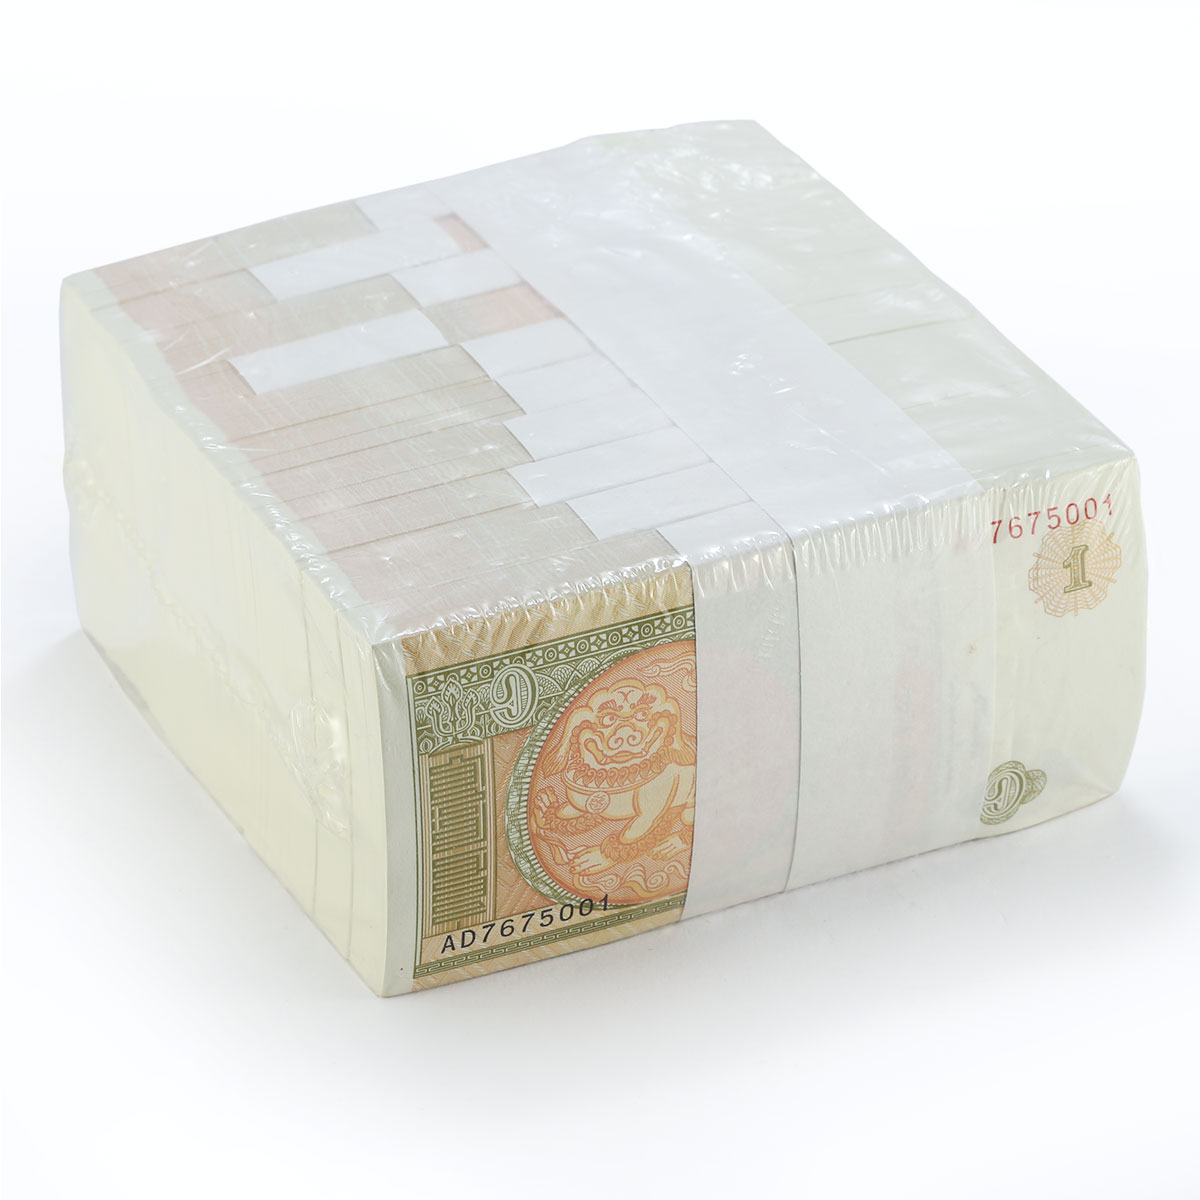 Mongolia 1 togrog 1000 Notes UNC Banknotes Bundle Brick 2008